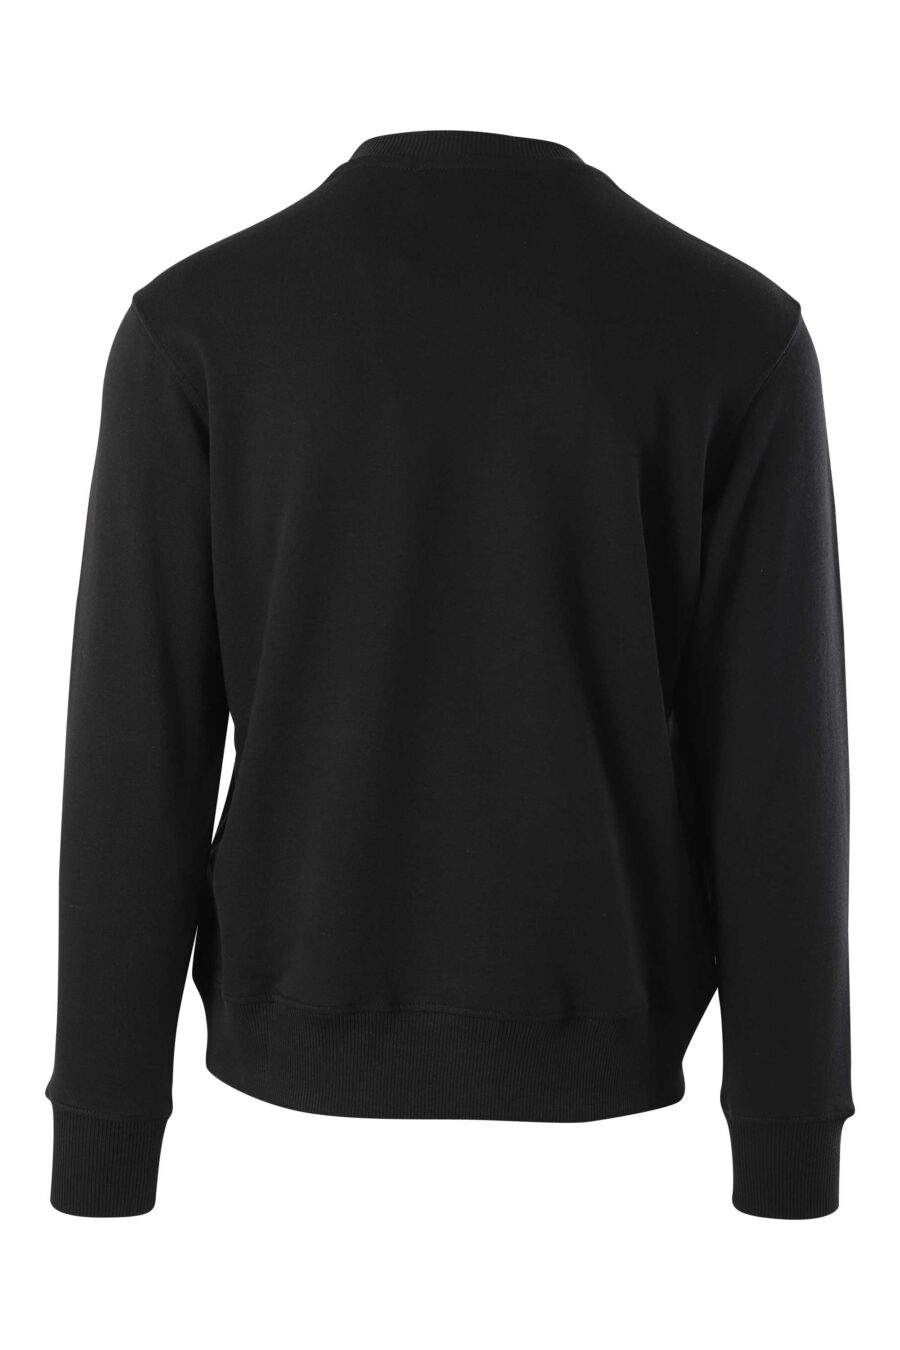 Black sweatshirt with round maxilogo - 8052019241525 2